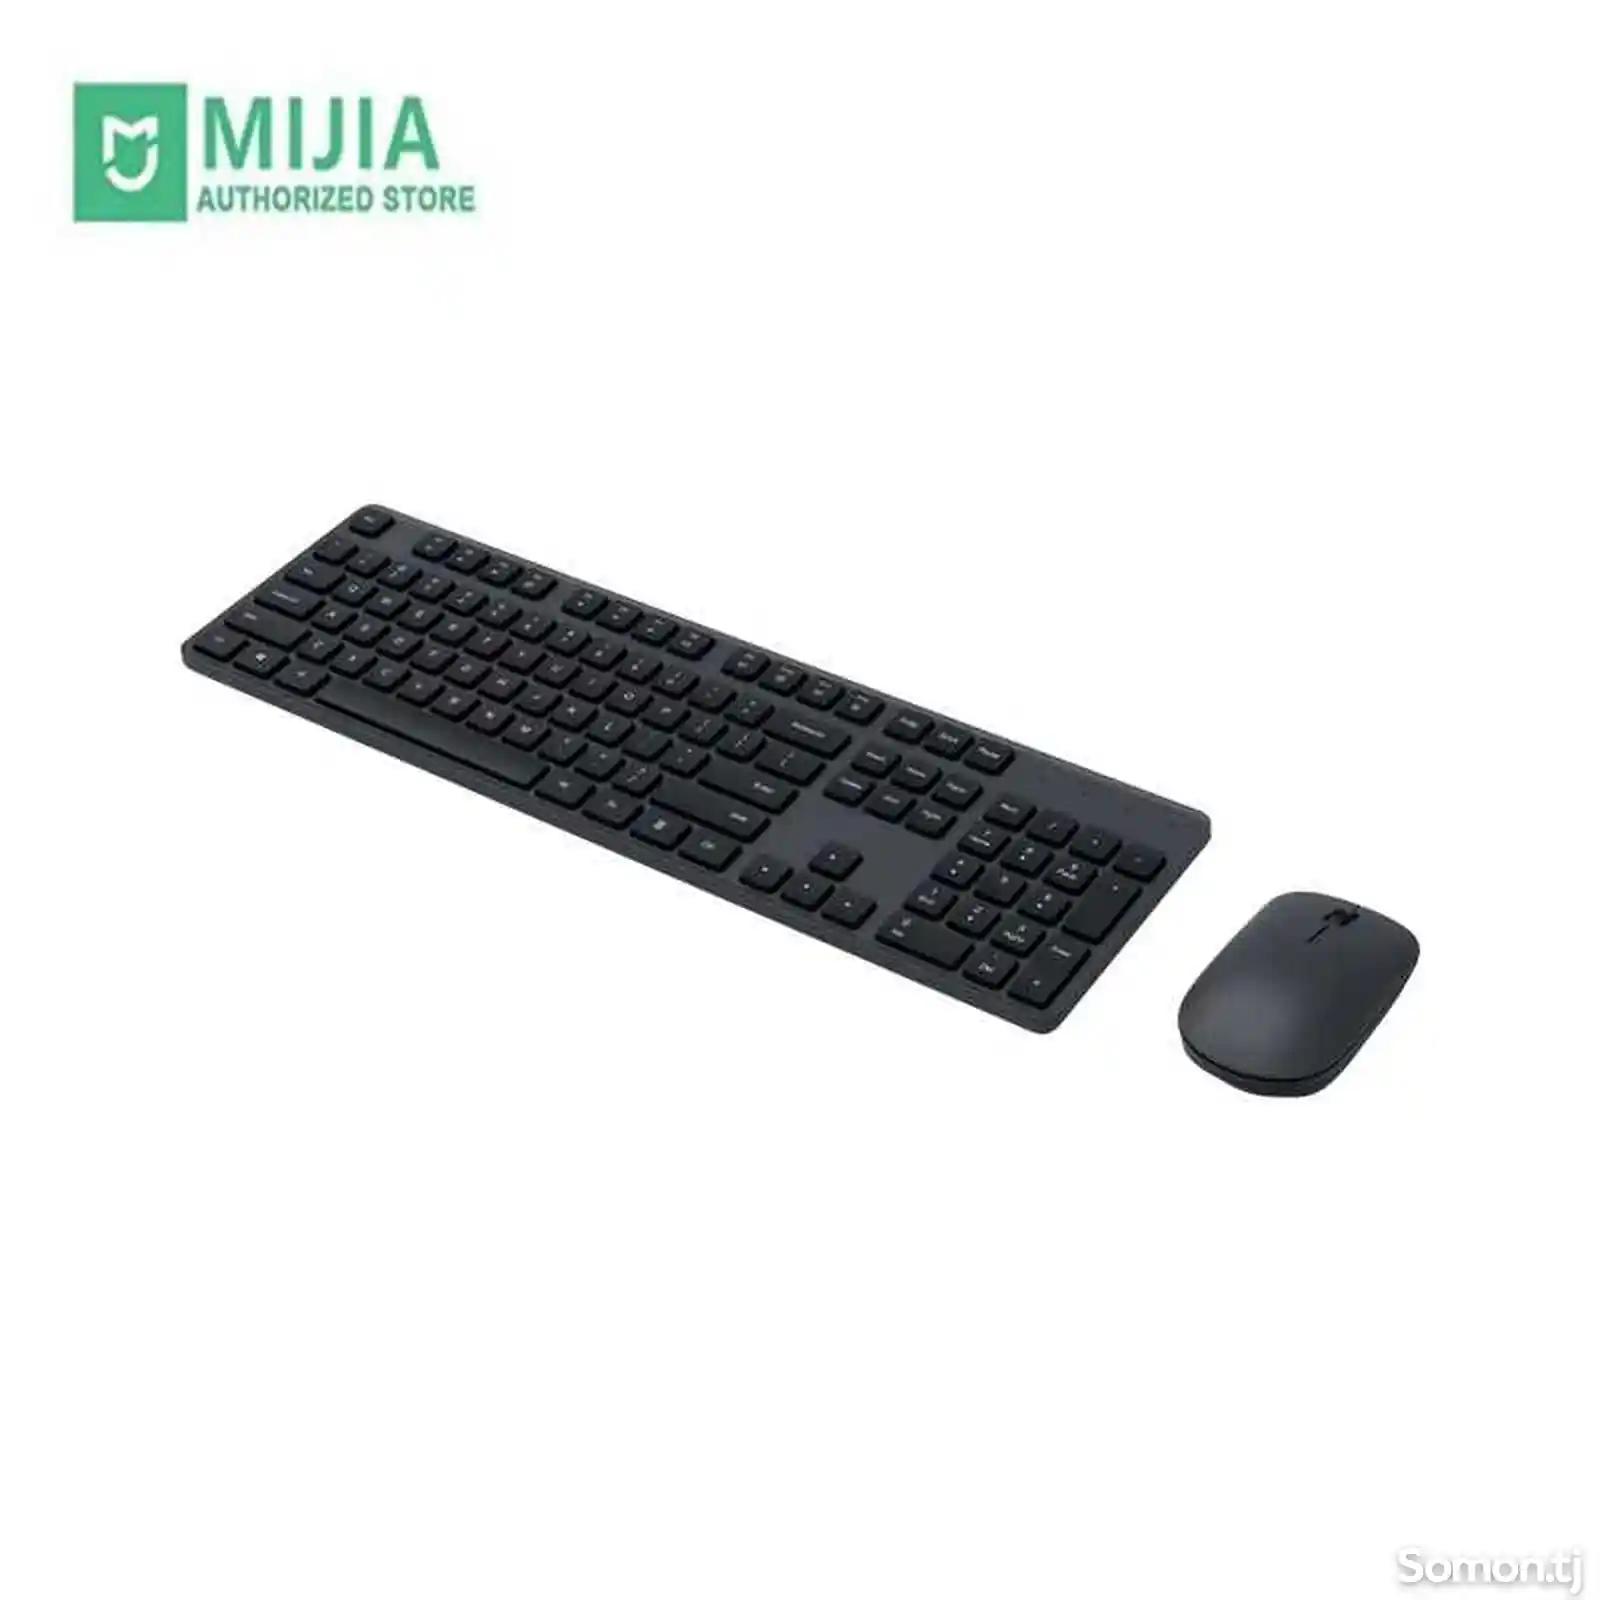 Комплект клавиатуры с мышью Xiaomi Mi Wireless Keyboard and Mouse Combo-4